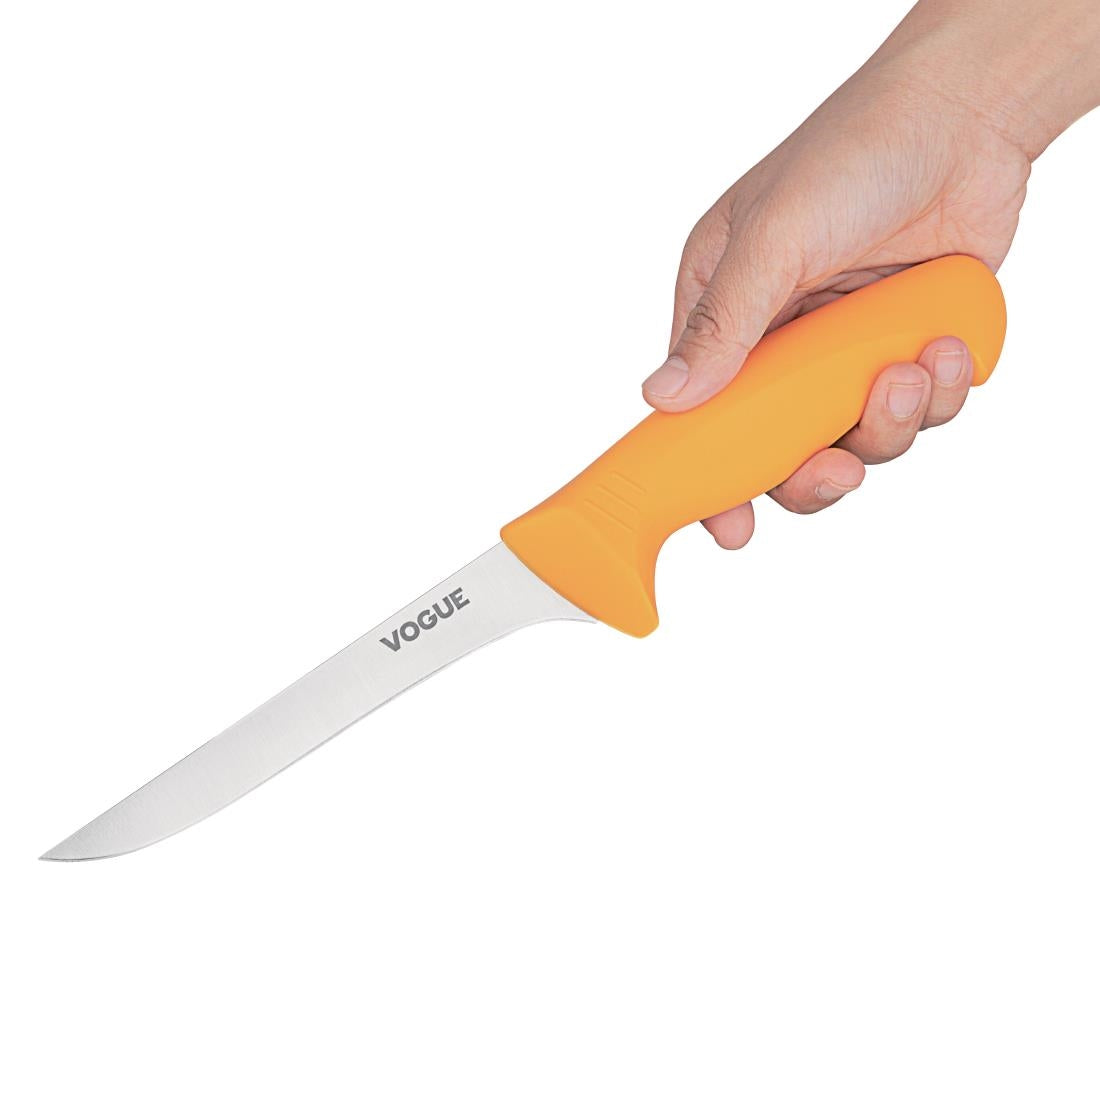 GH524 Vogue Pro Boning Knife 15cm JD Catering Equipment Solutions Ltd